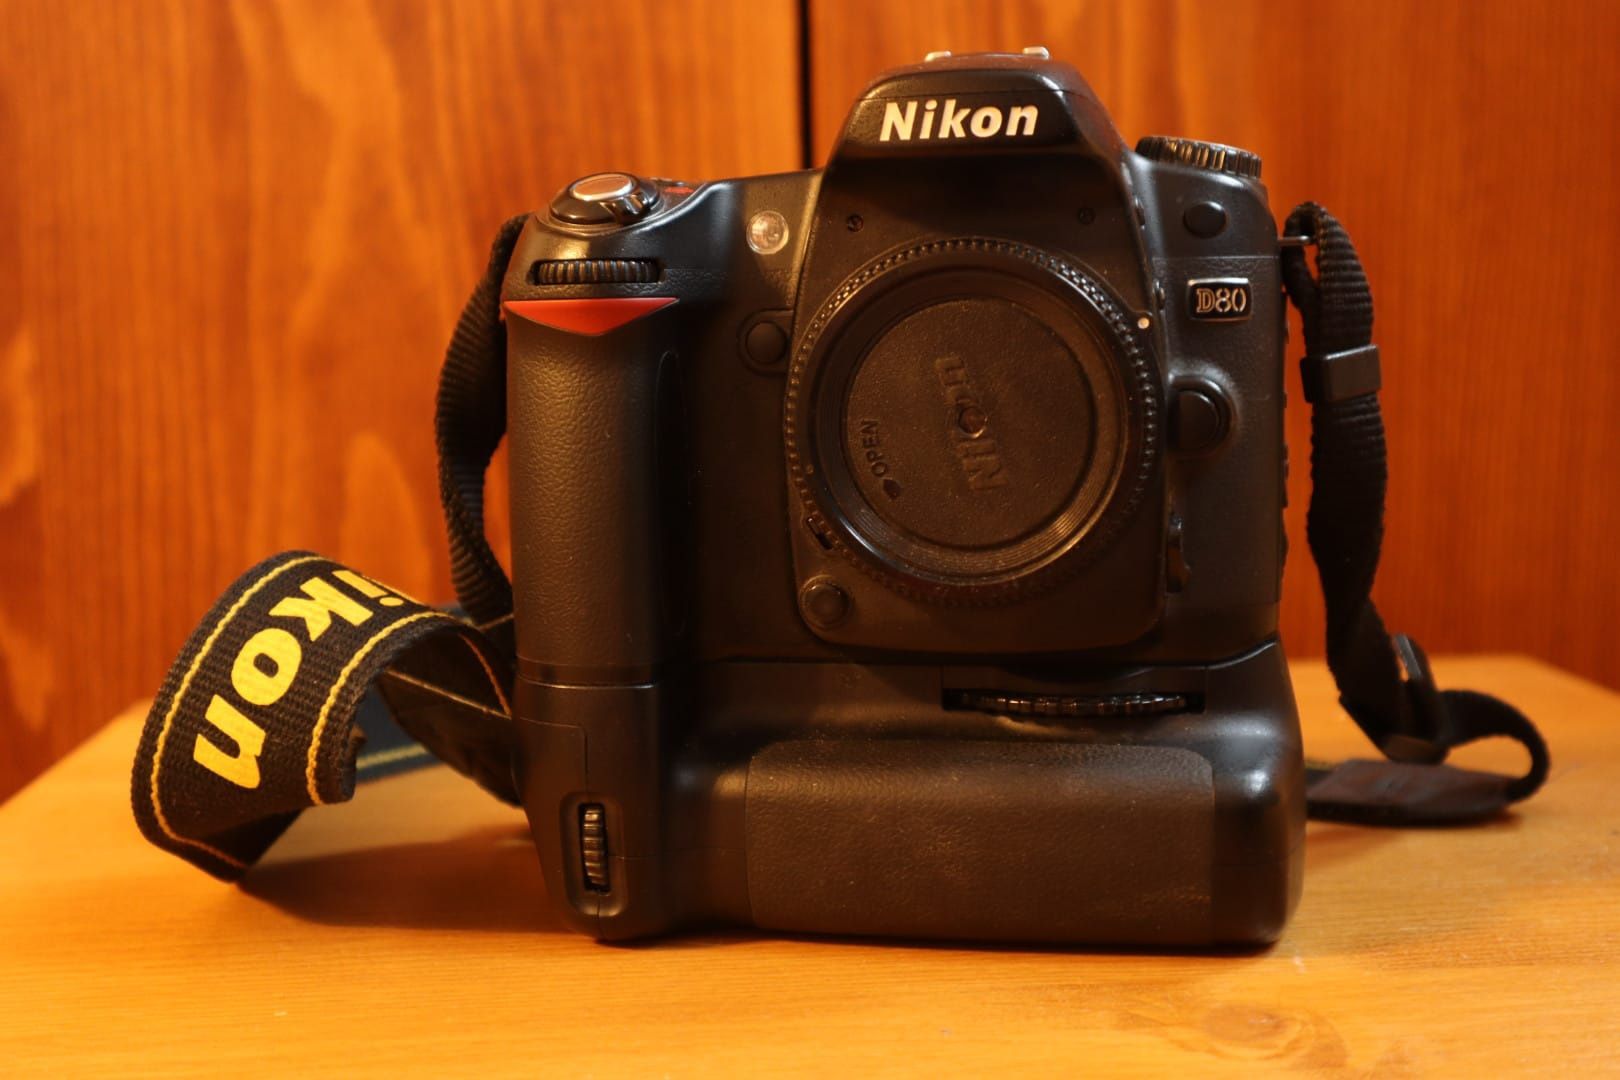 Kultowy Nikon D80 + grip + dodatki